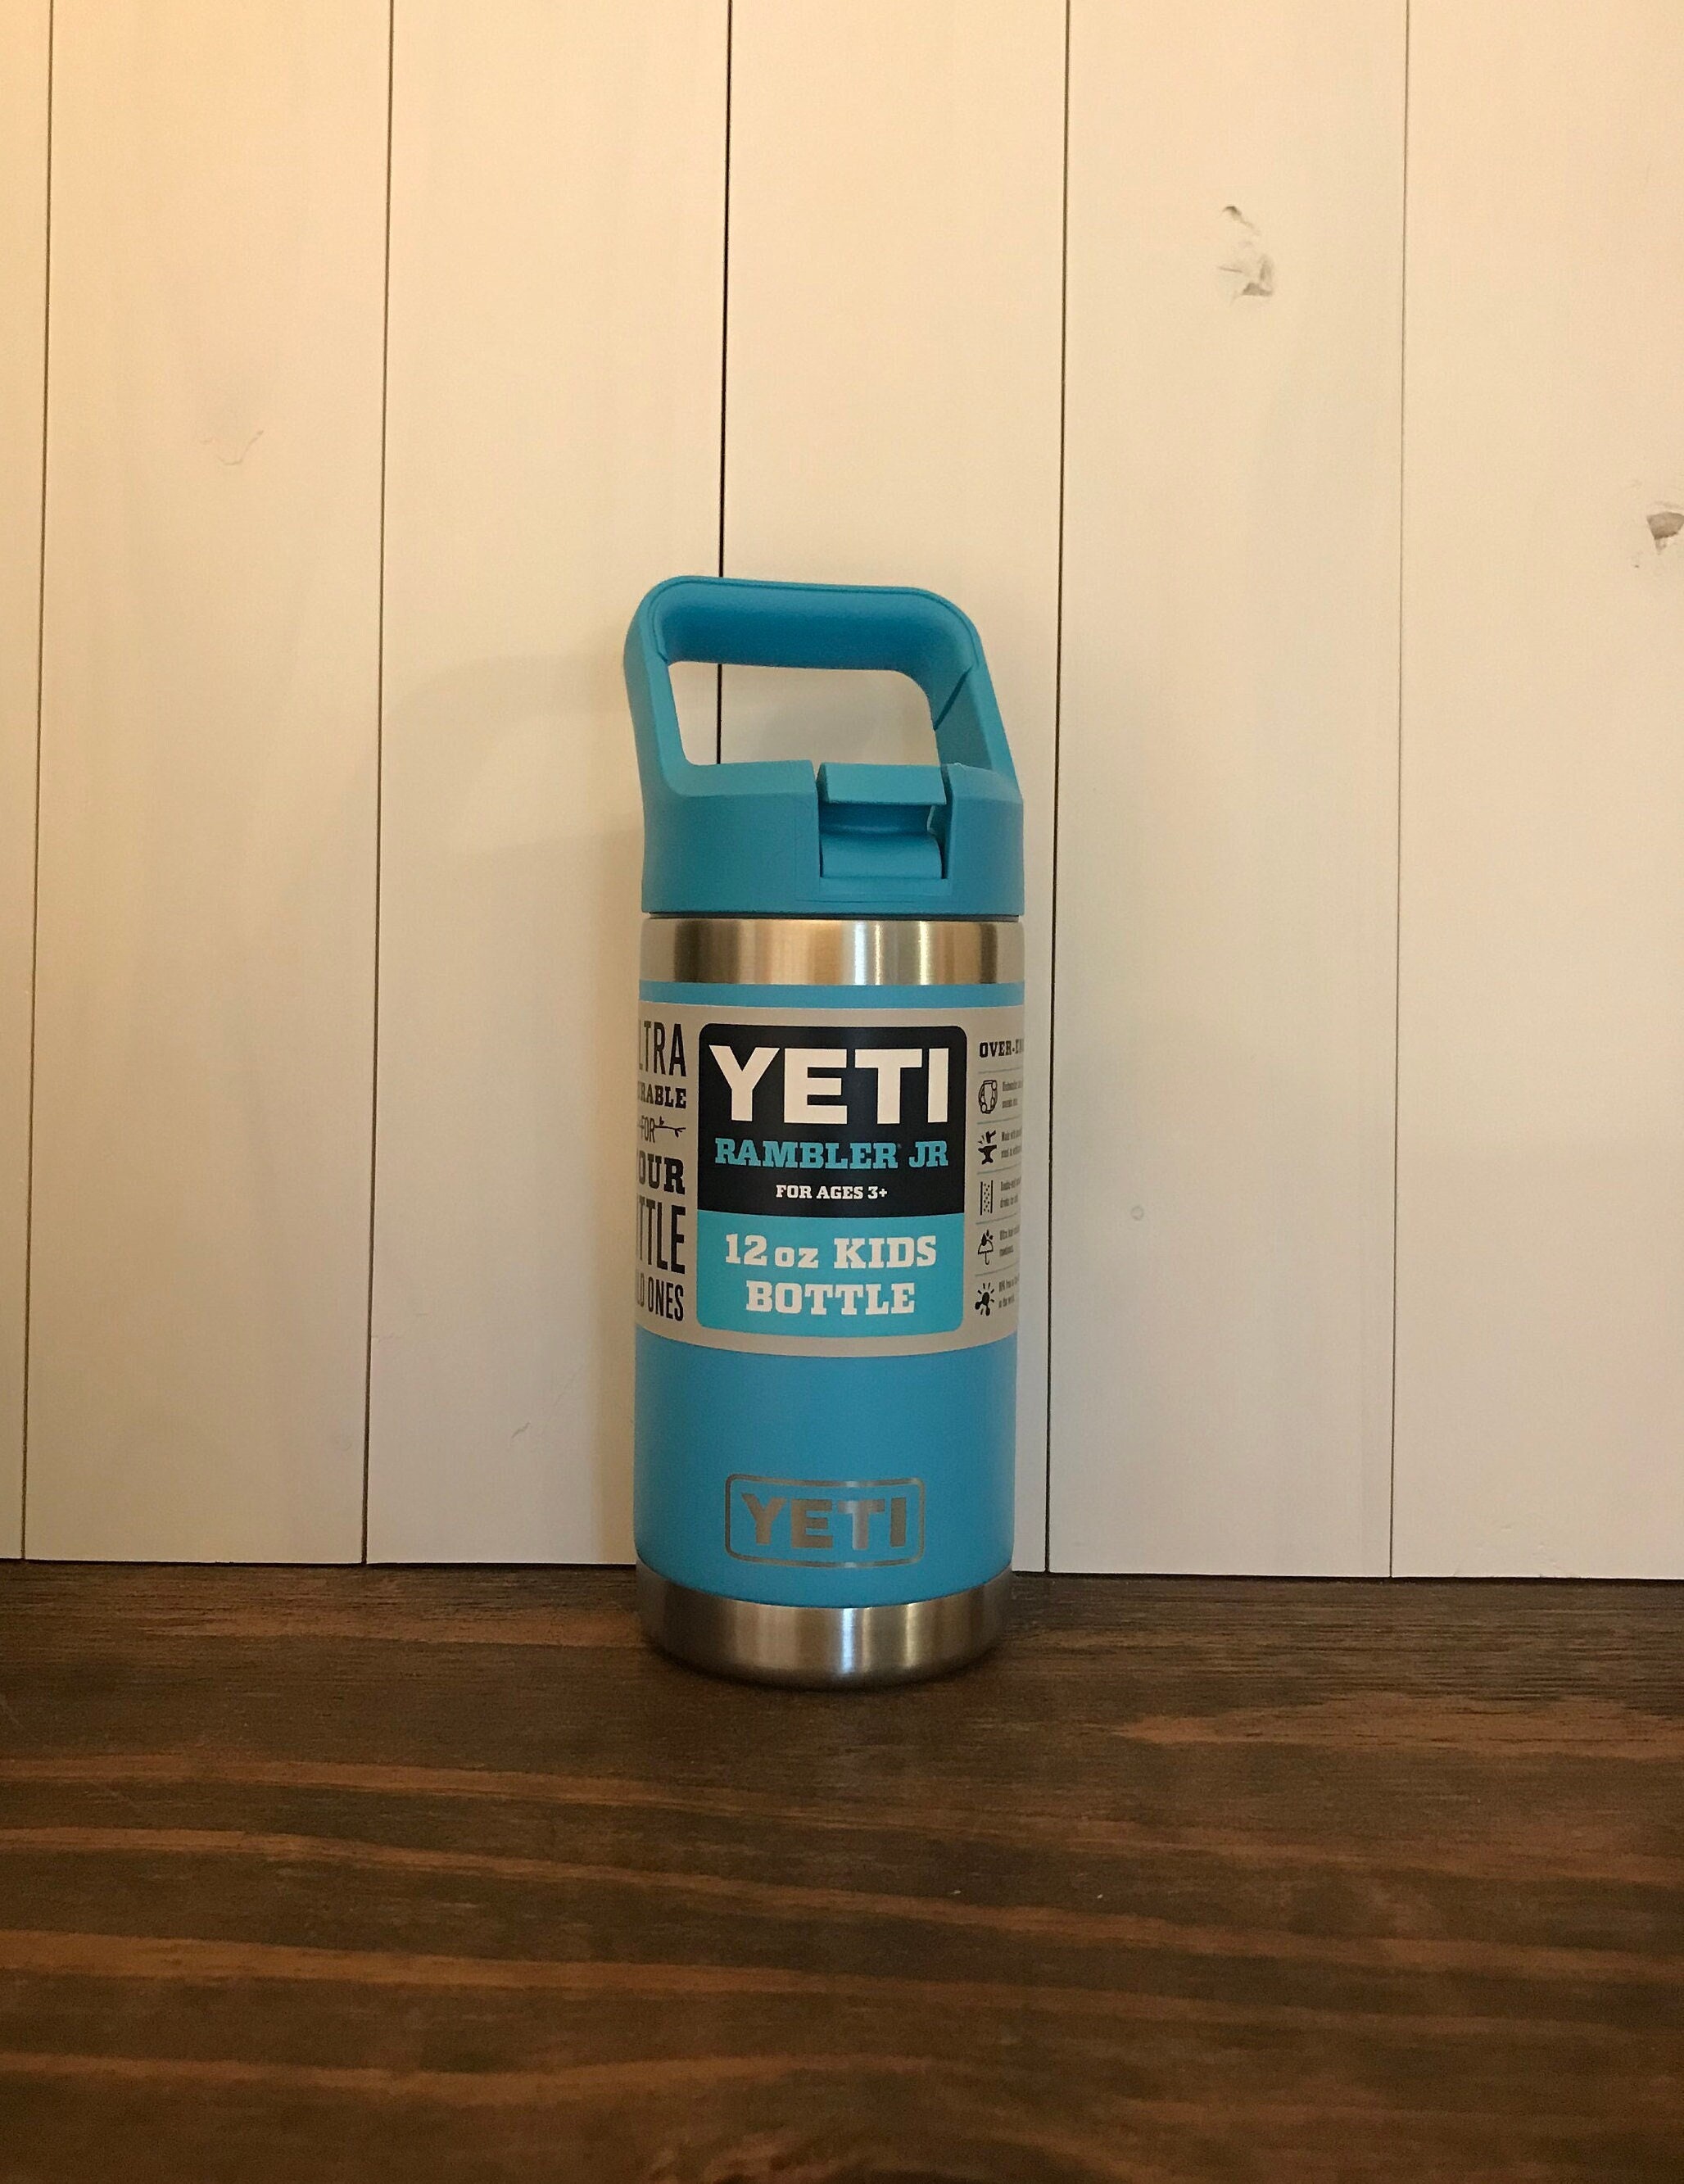 YETI Rambler 35 oz Straw Mug, Vacuum Insulated, Stainless Steel, Reef Blue